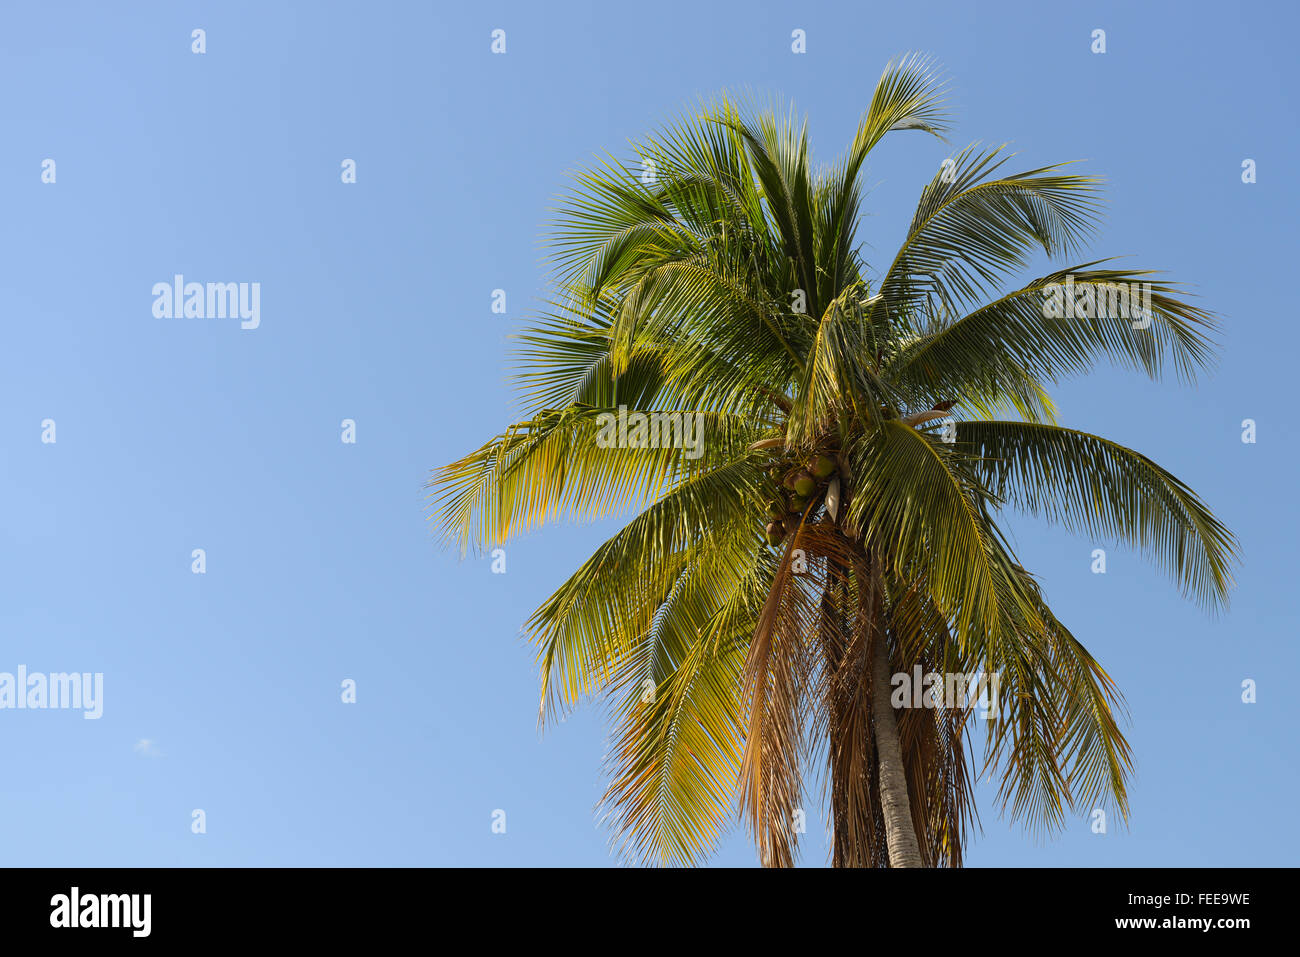 Palm tree against clear blue skies. Patillas, Puerto Rico. Caribbean Island. US territory. Stock Photo